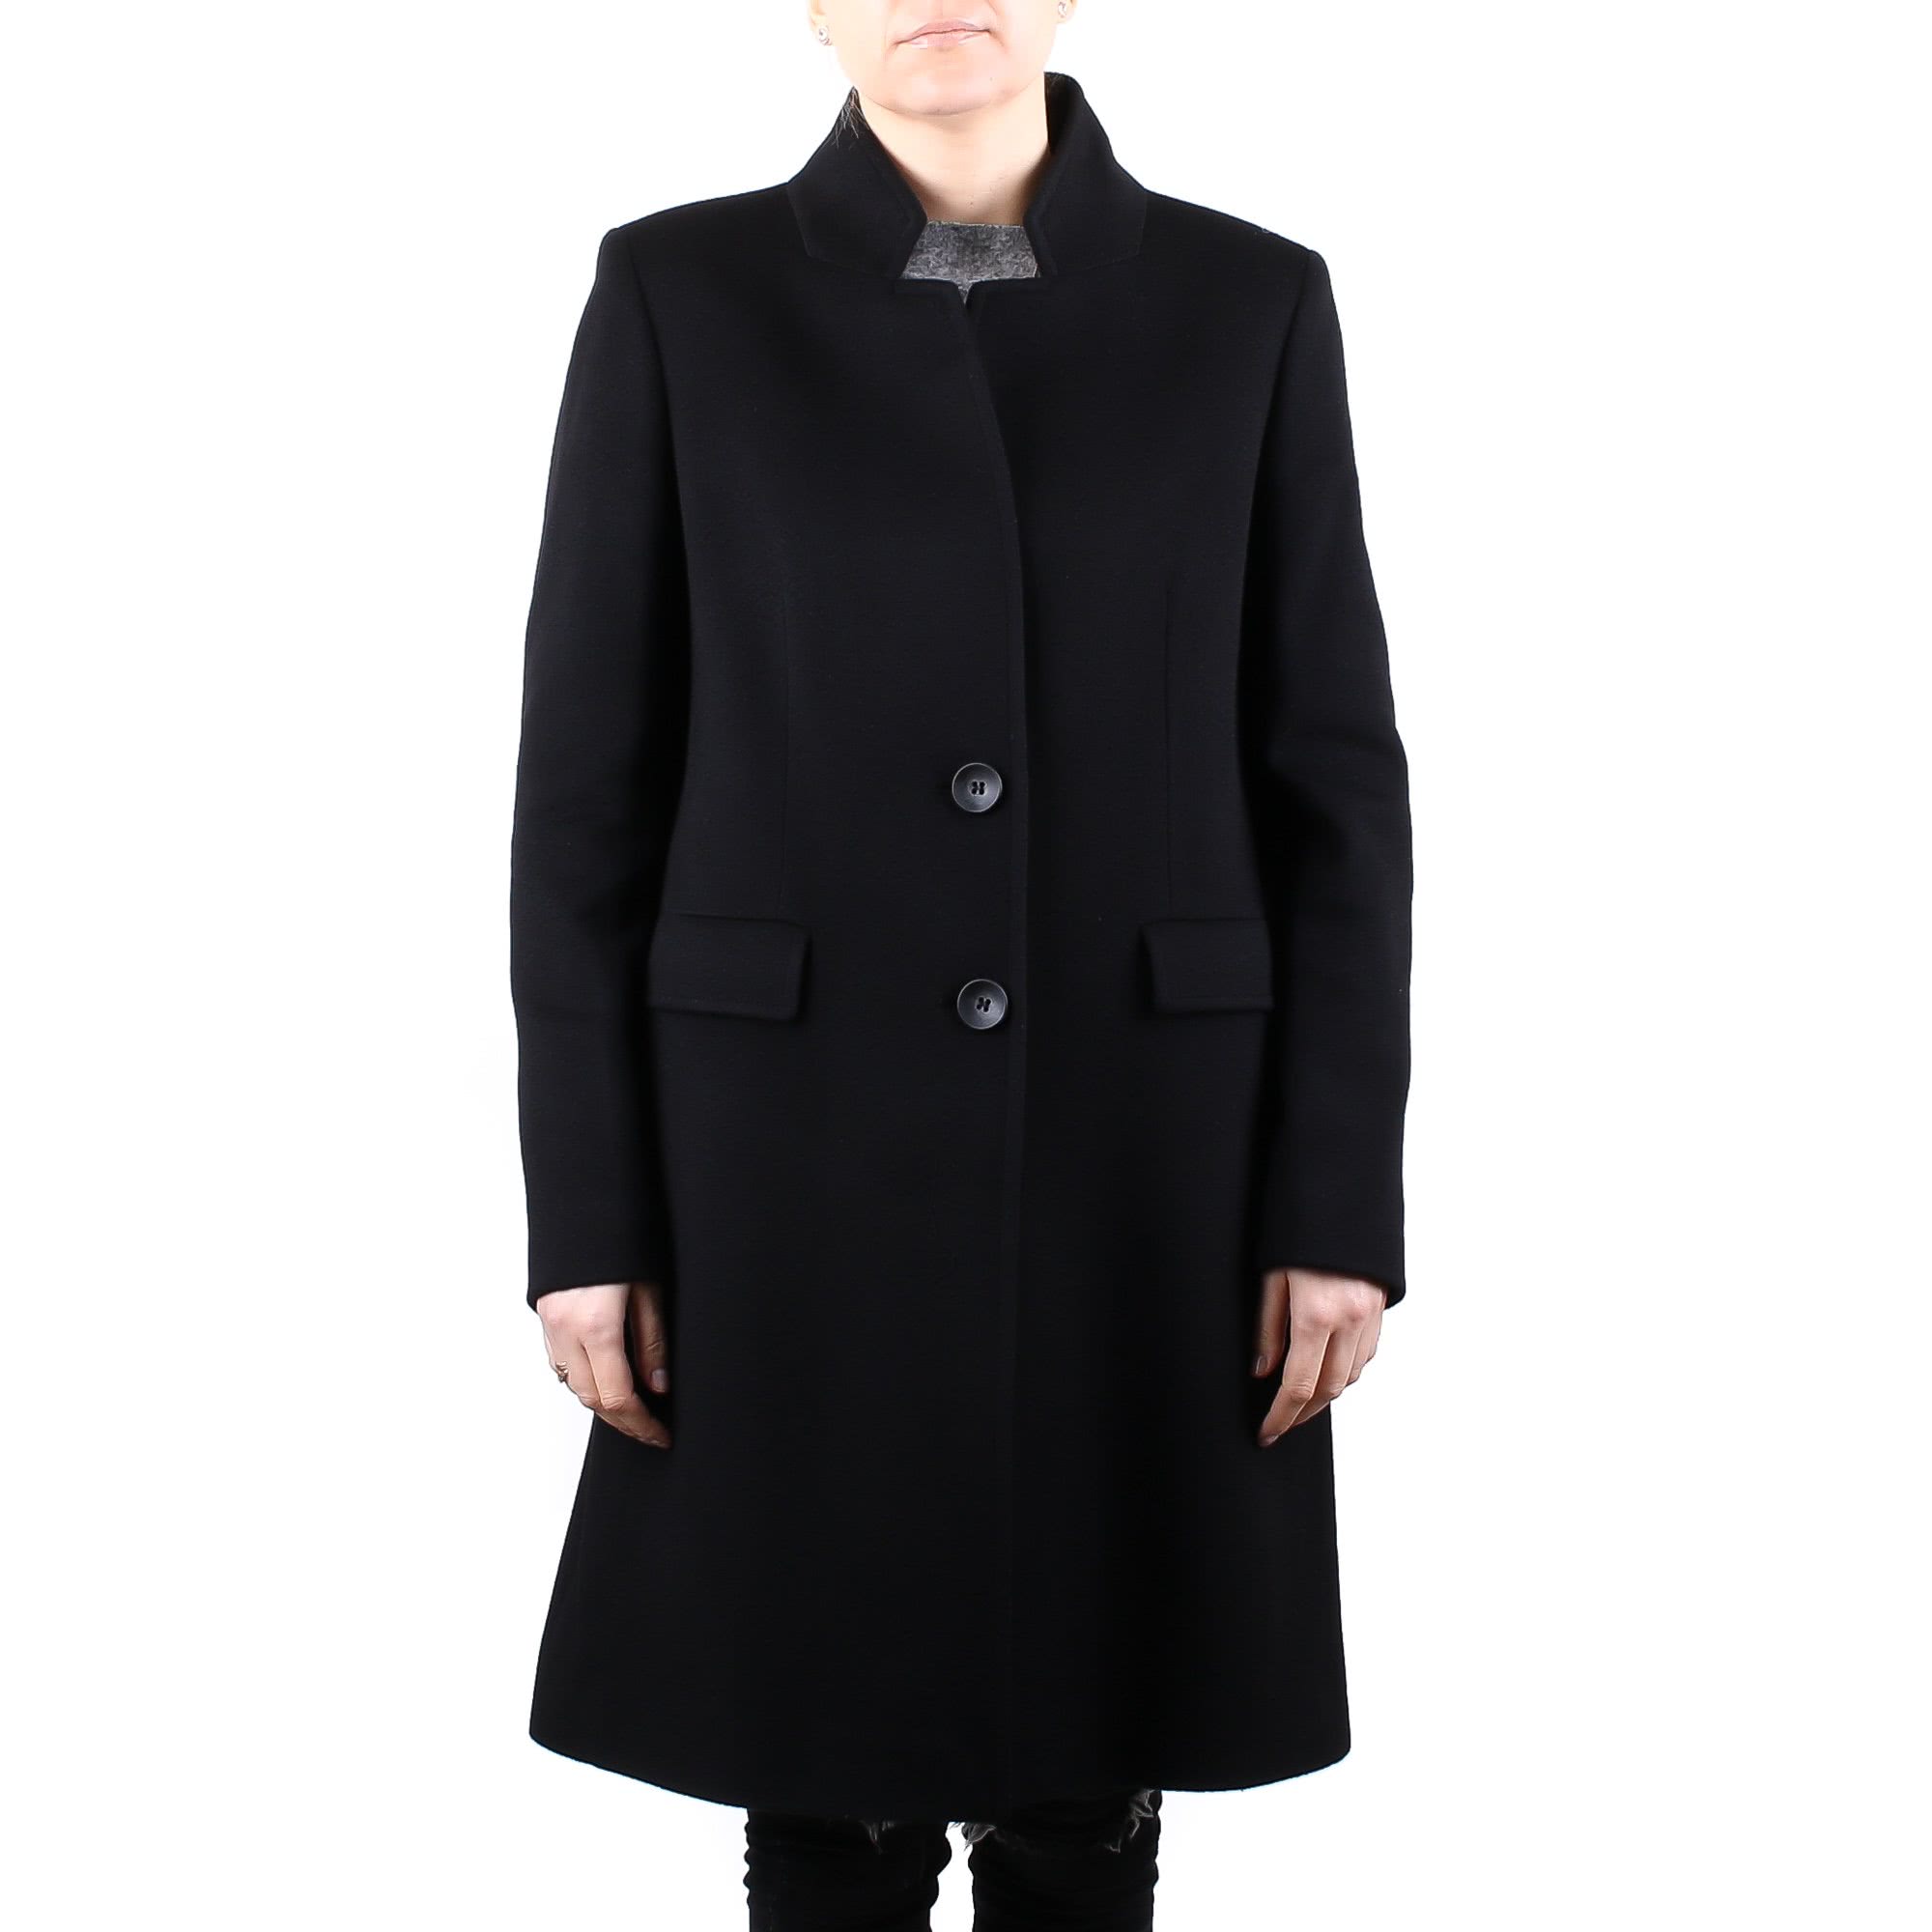 Пальто от производителя в спб. Пальто Carla vi Италия. Модели пальто от Карден. Пальто производство Италия.